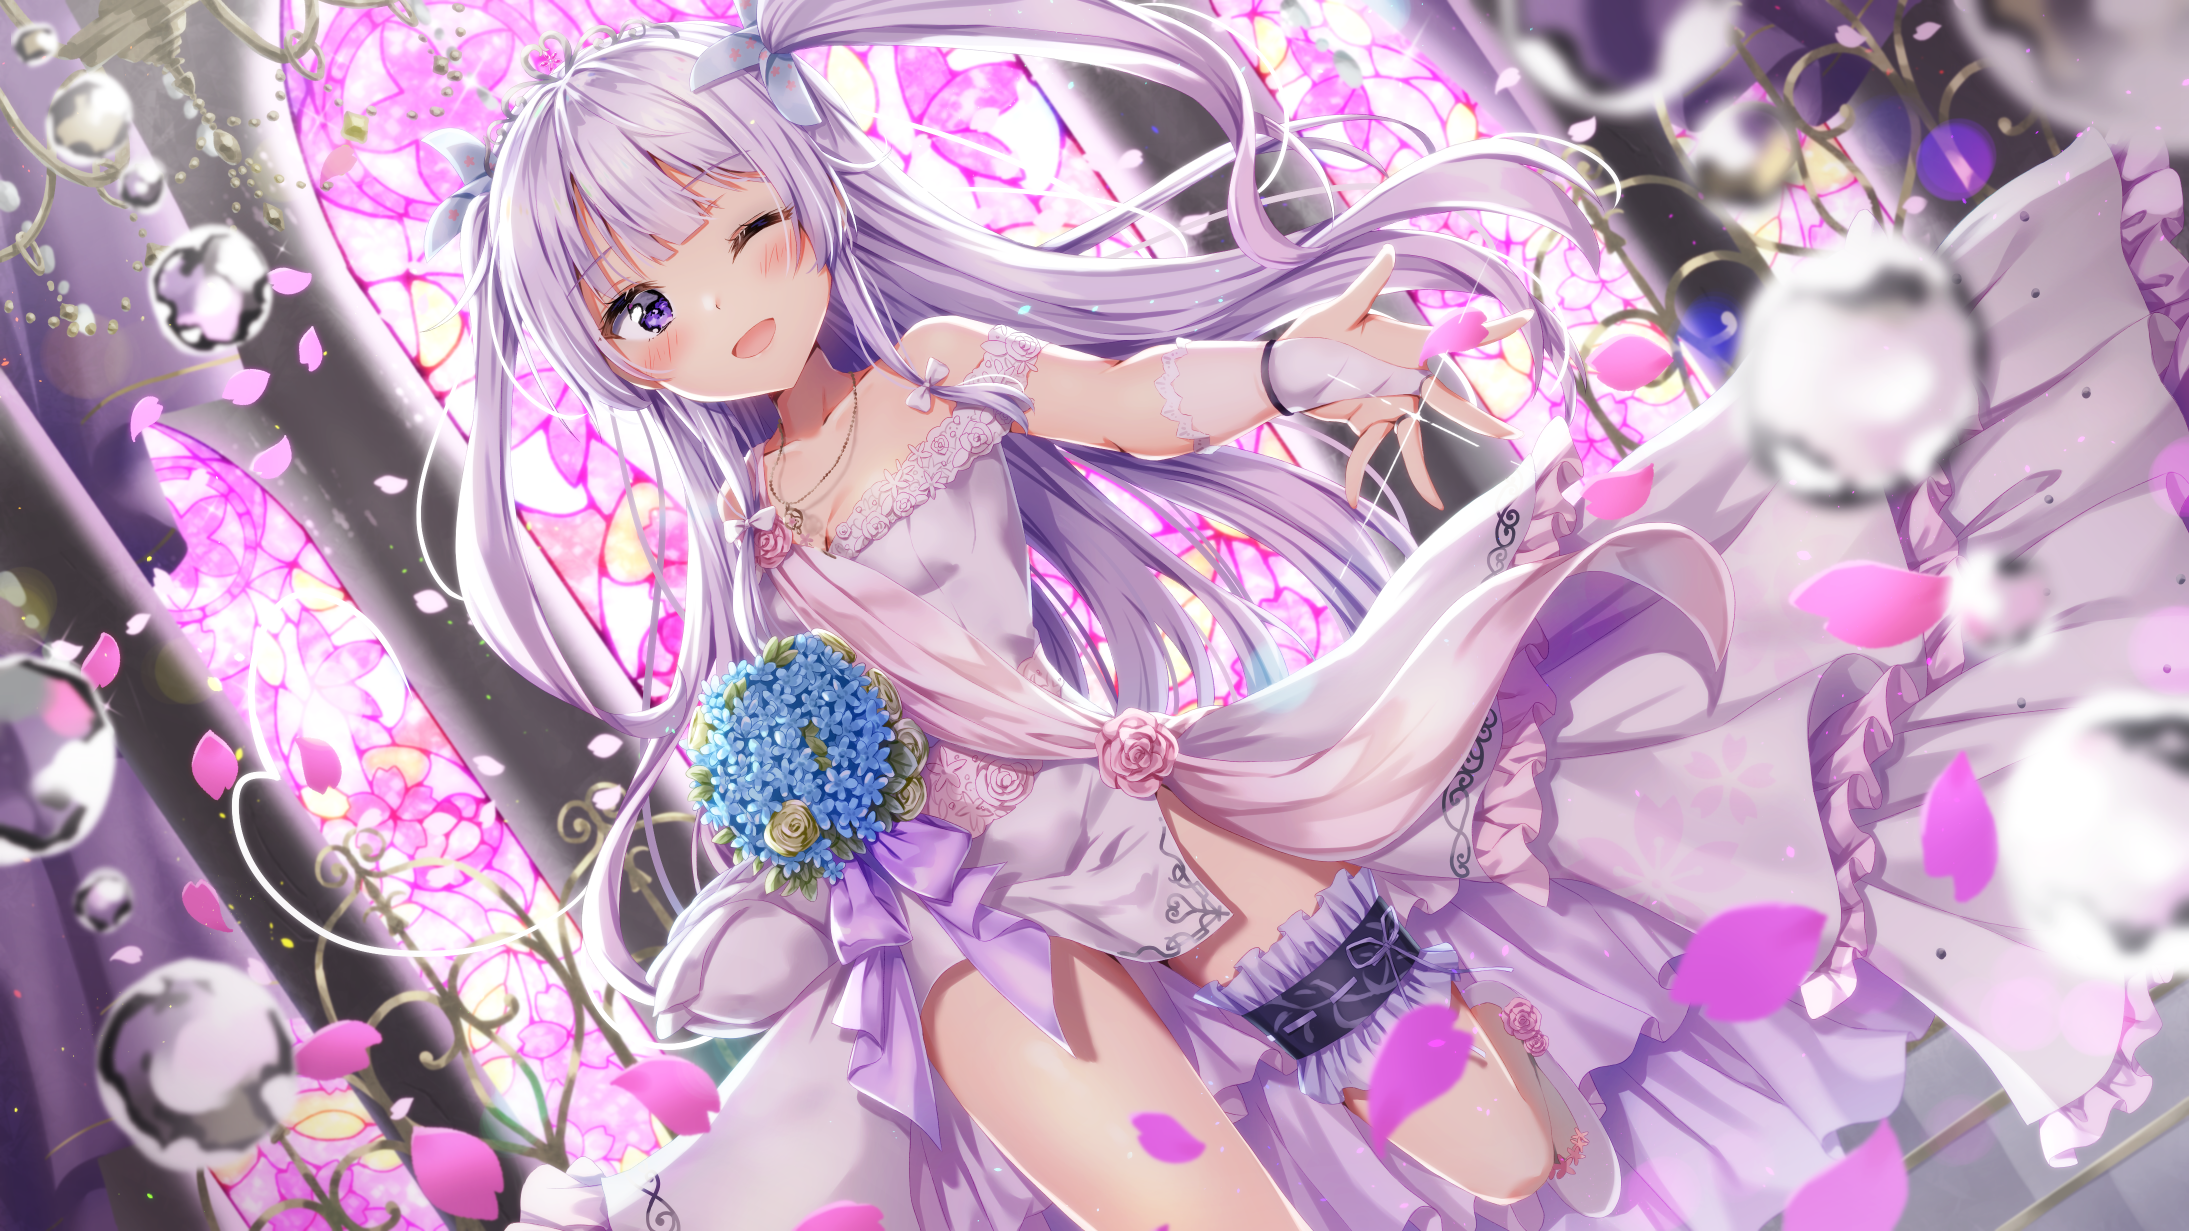 Anime 2189x1231 anime anime girls digital art artwork 2D portrait Kuria purple eyes wink blushing silver hair petals dress bare shoulders